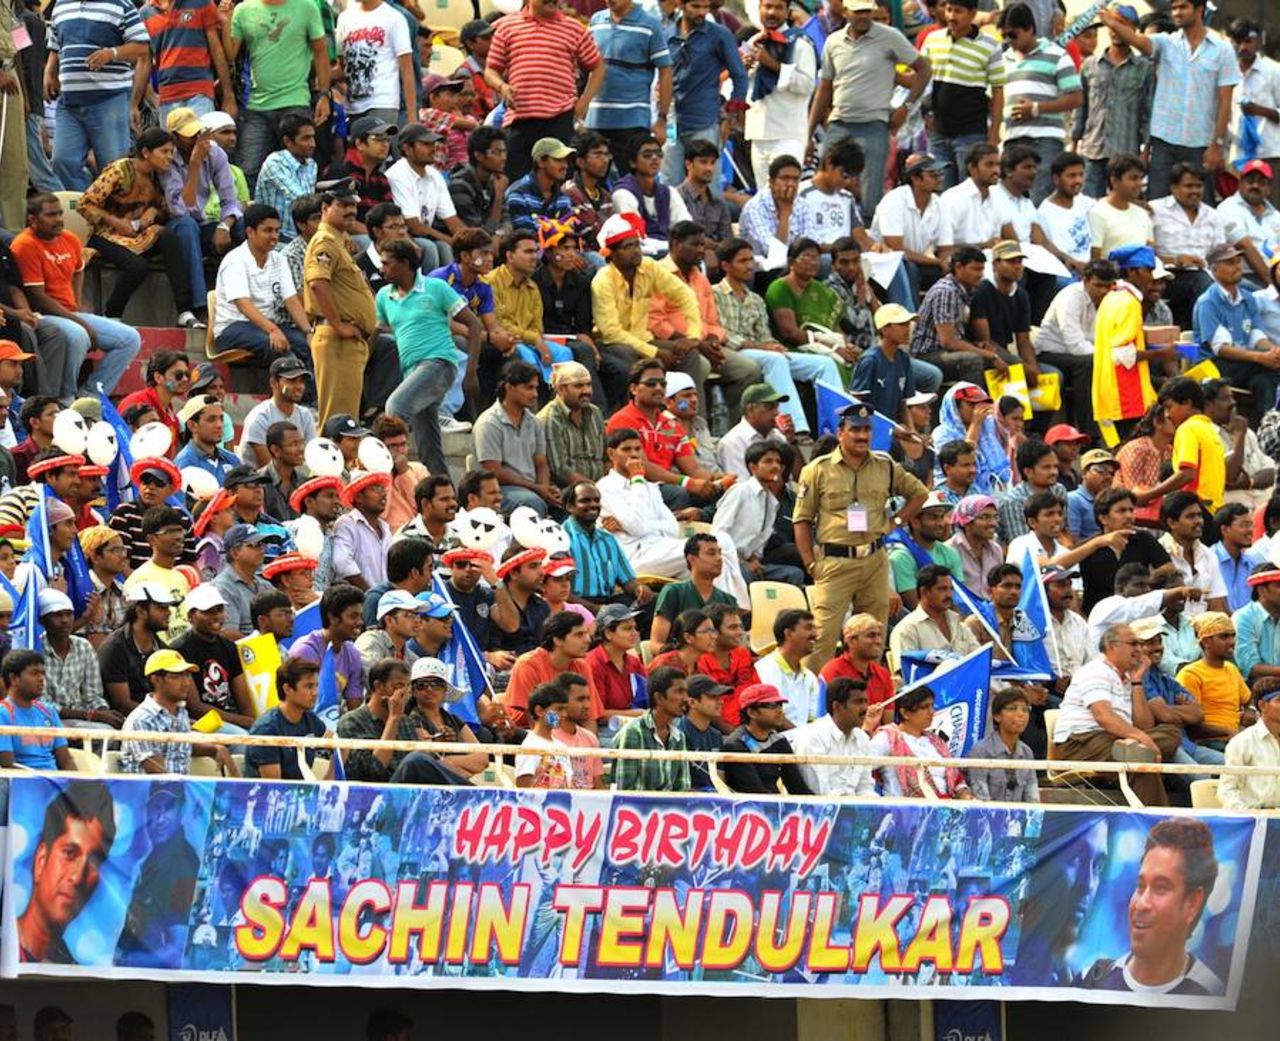 Fans wish Sachin Tendulkar on his 38th birthday, Deccan Chargers v Mumbai Indians, IPL 2011, Hyderabad, April 24, 2011